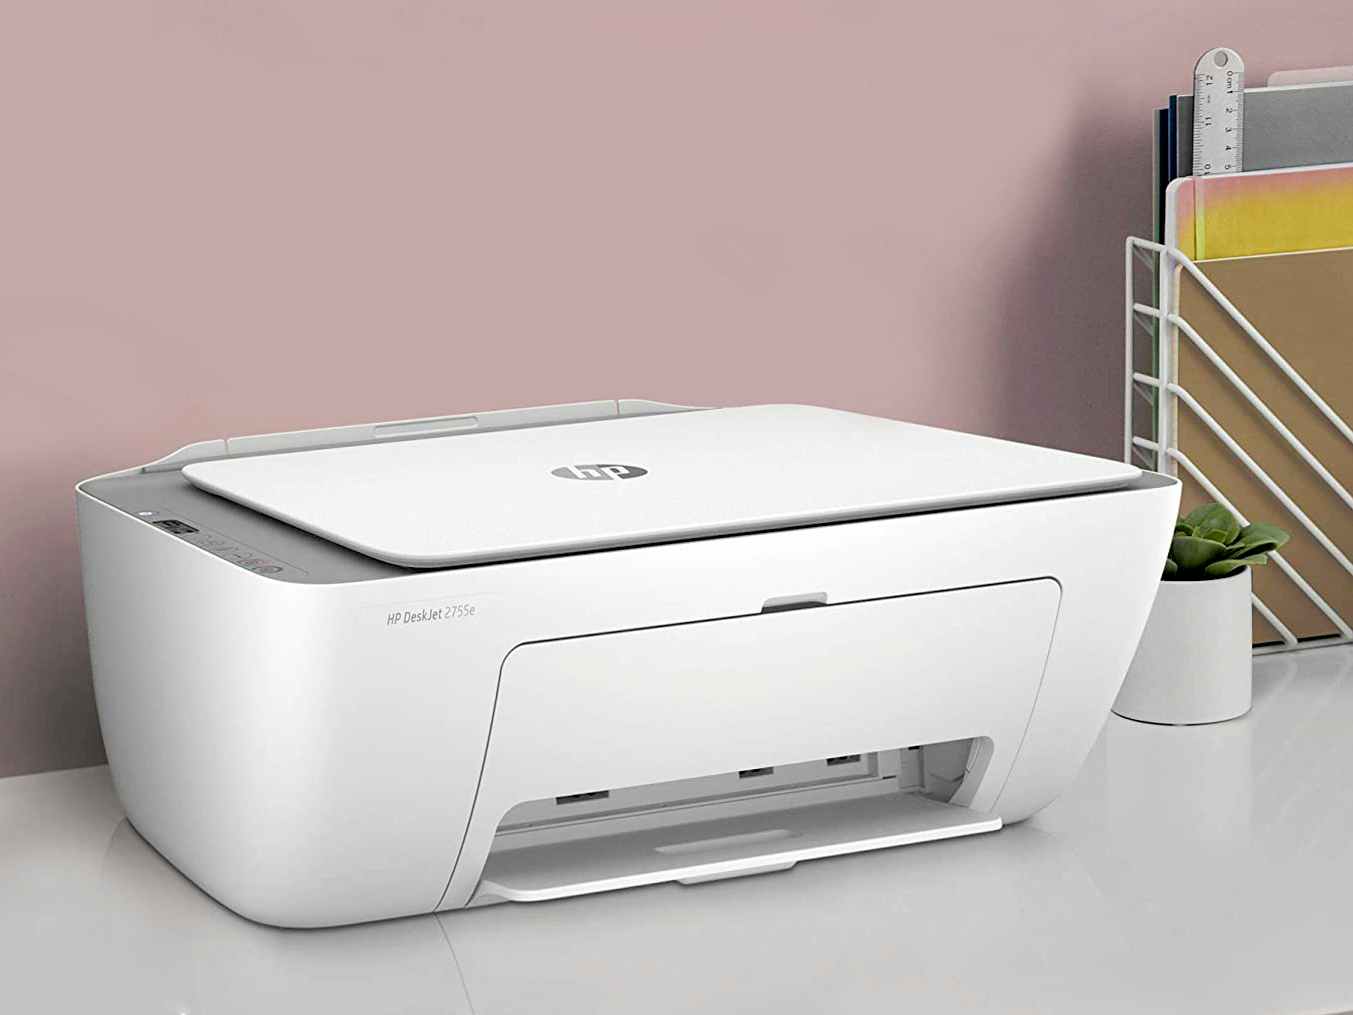 HP DeskJet 2755e Wireless Color All-in-One Printer on desk